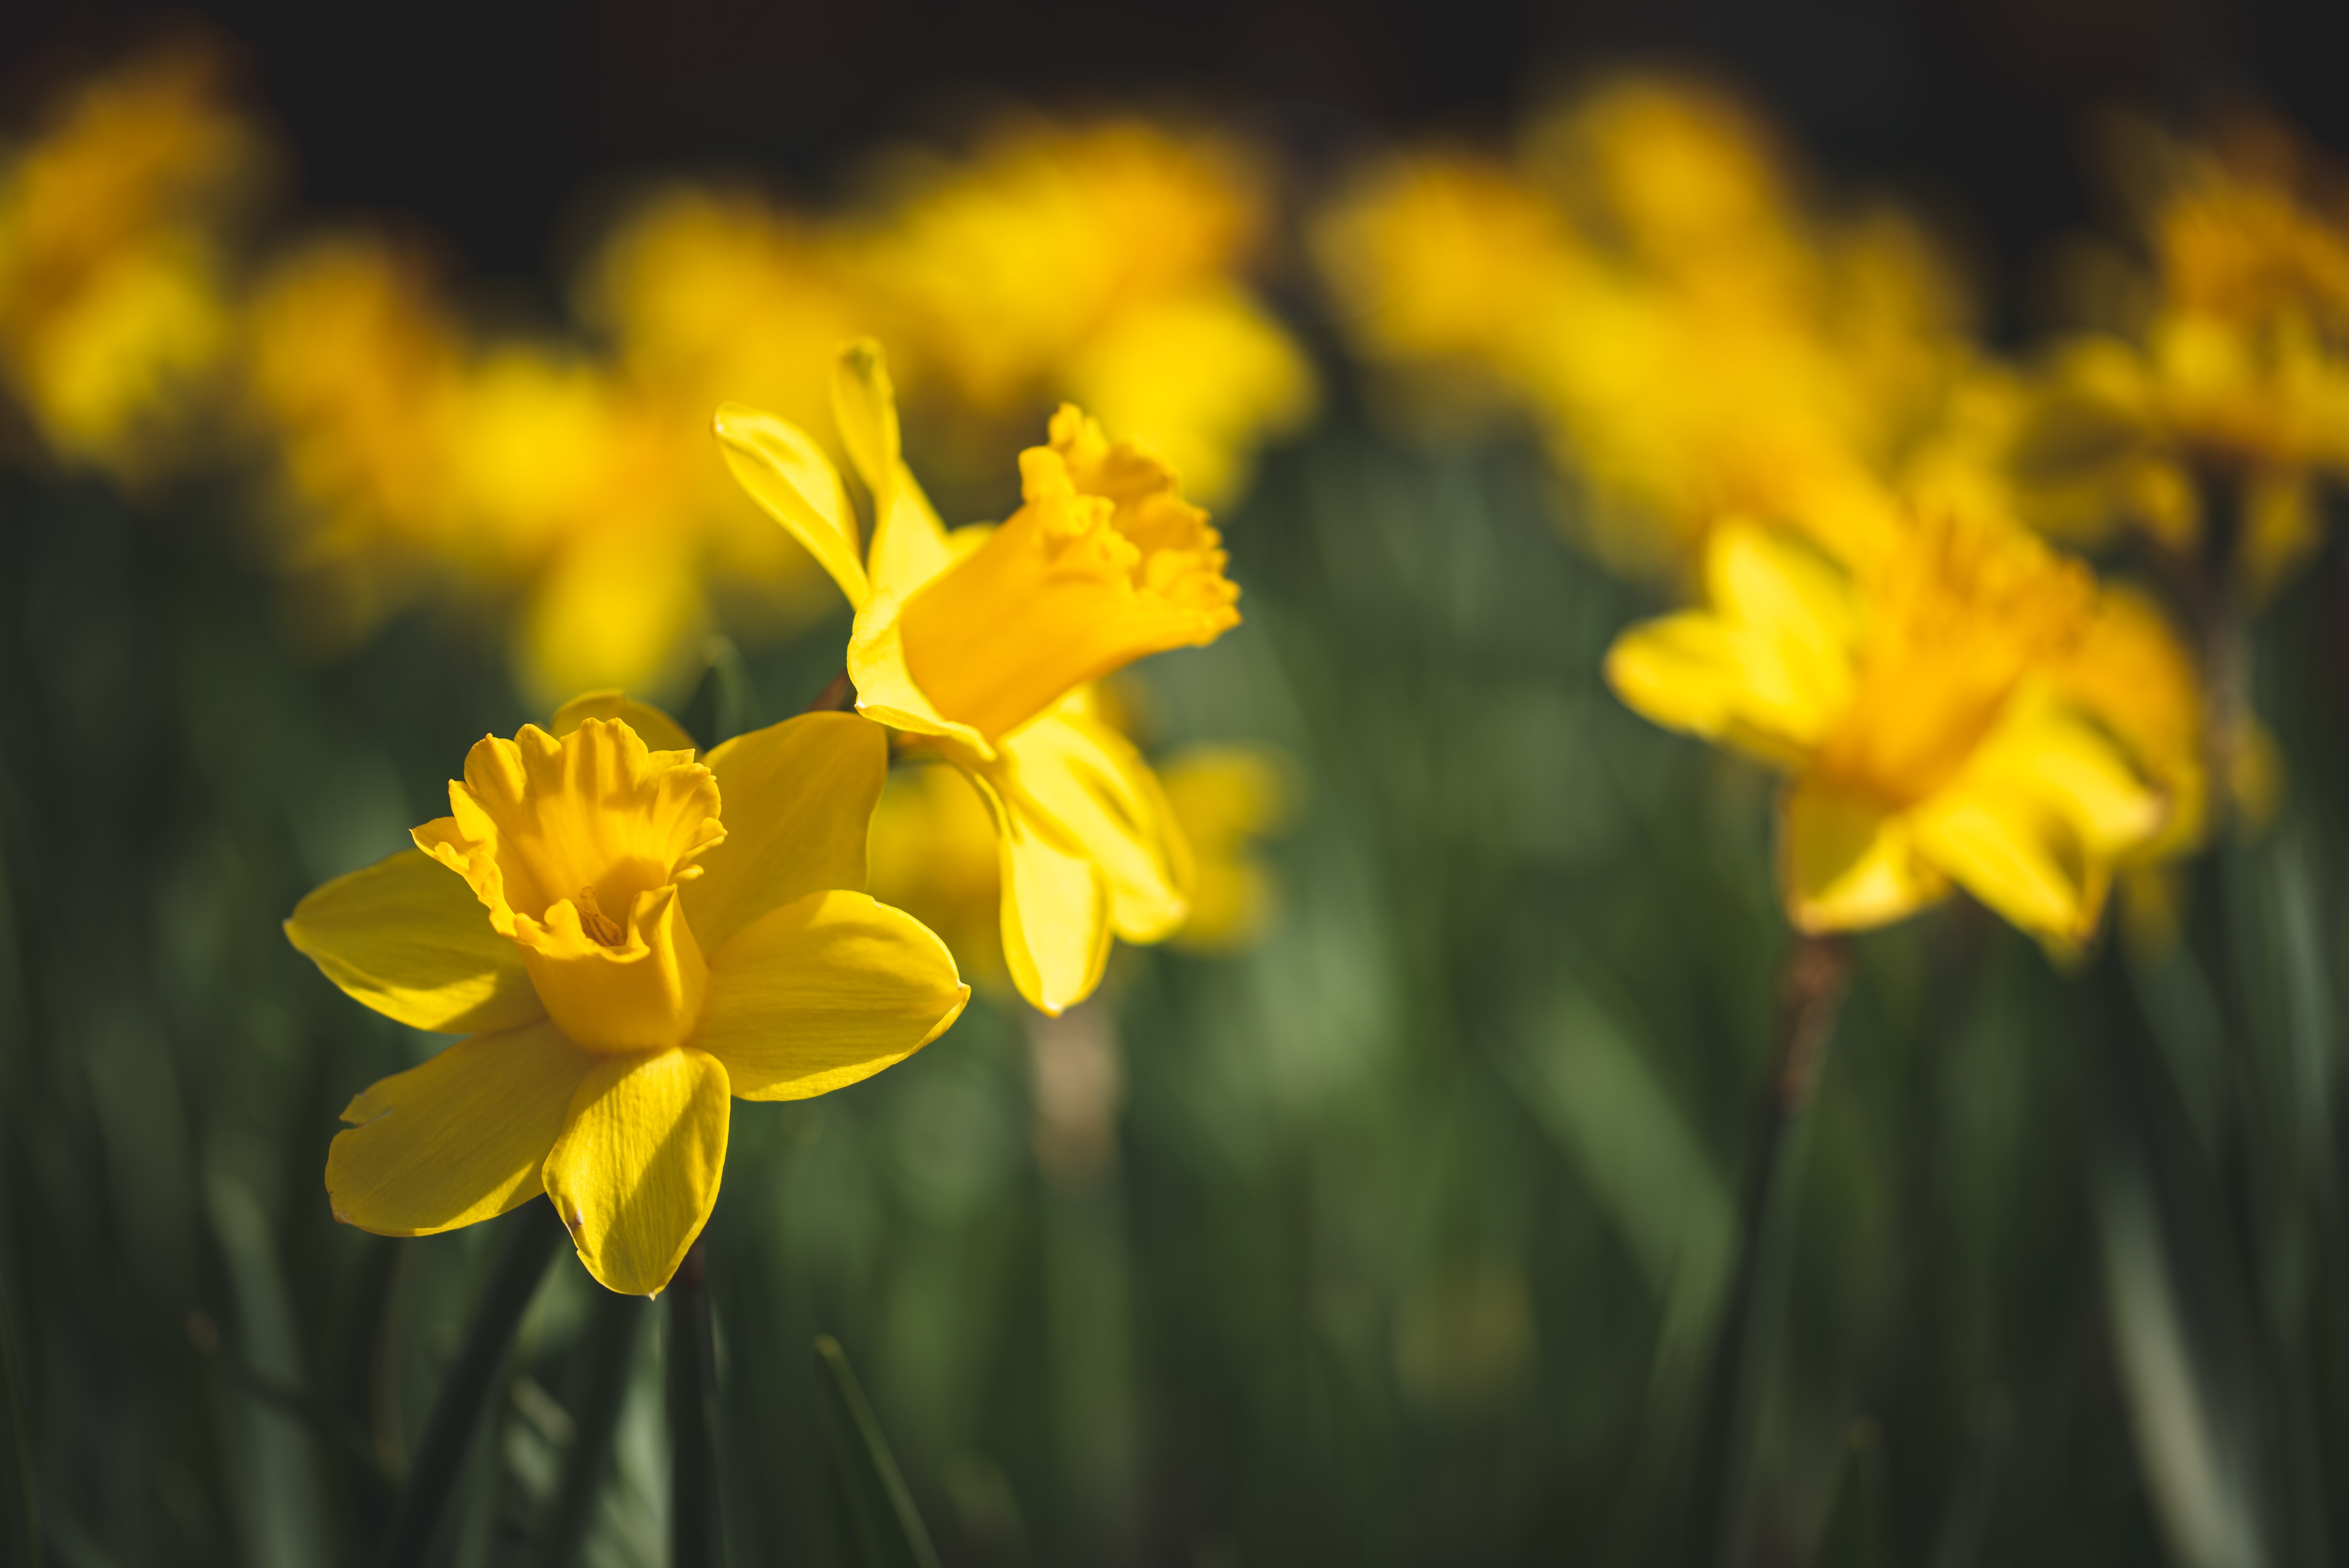 Daffodil stock image - Image credit Marian Kroell